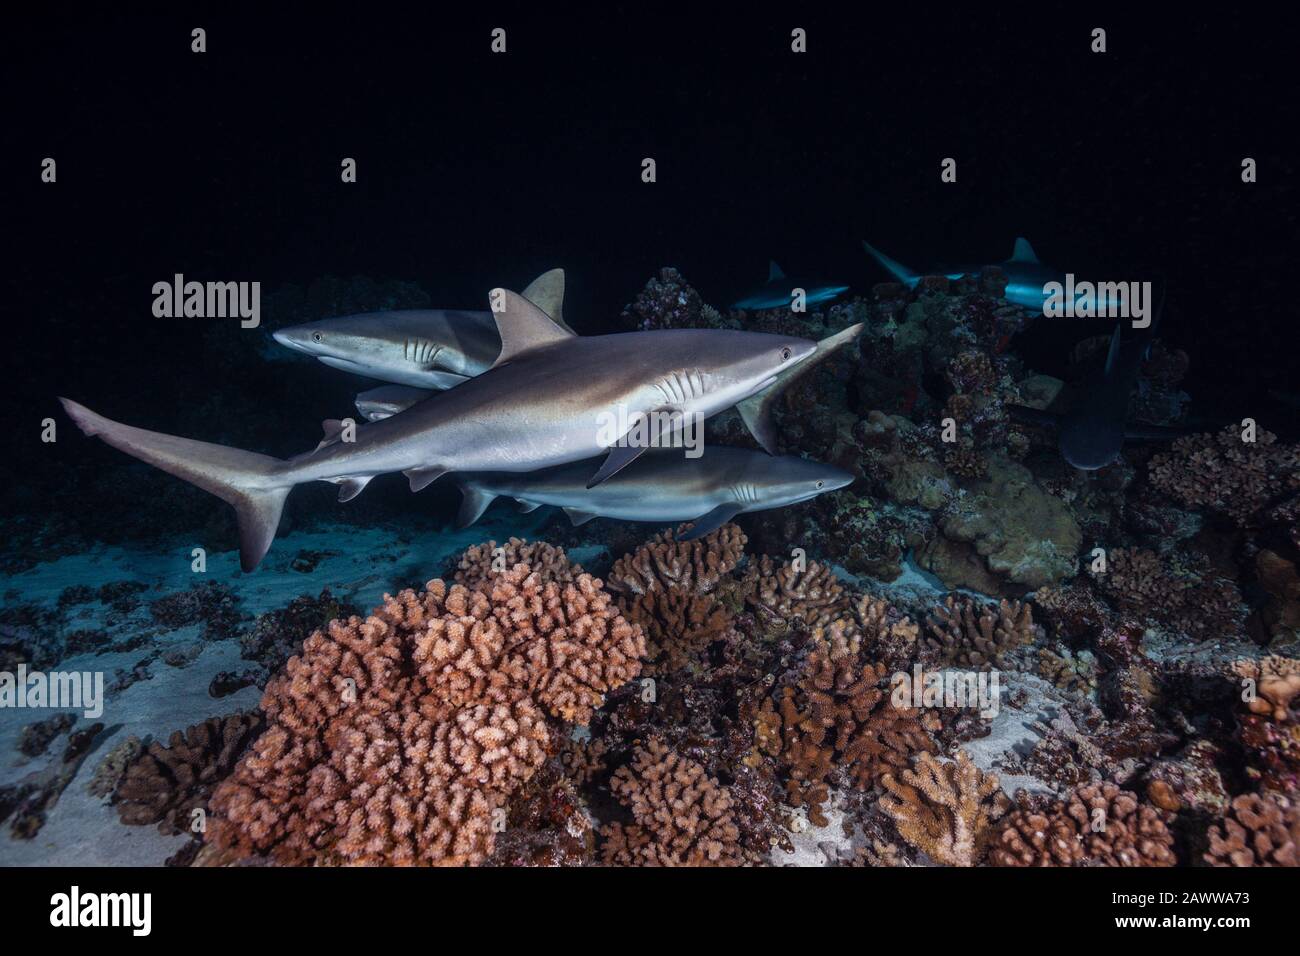 Caza De Tiburones En El Arrecife Gris Por La Noche, Carcharhinus Amblyrhynchos, Fakarava, Tuamotu Archipel, Polinesia Francesa Foto de stock